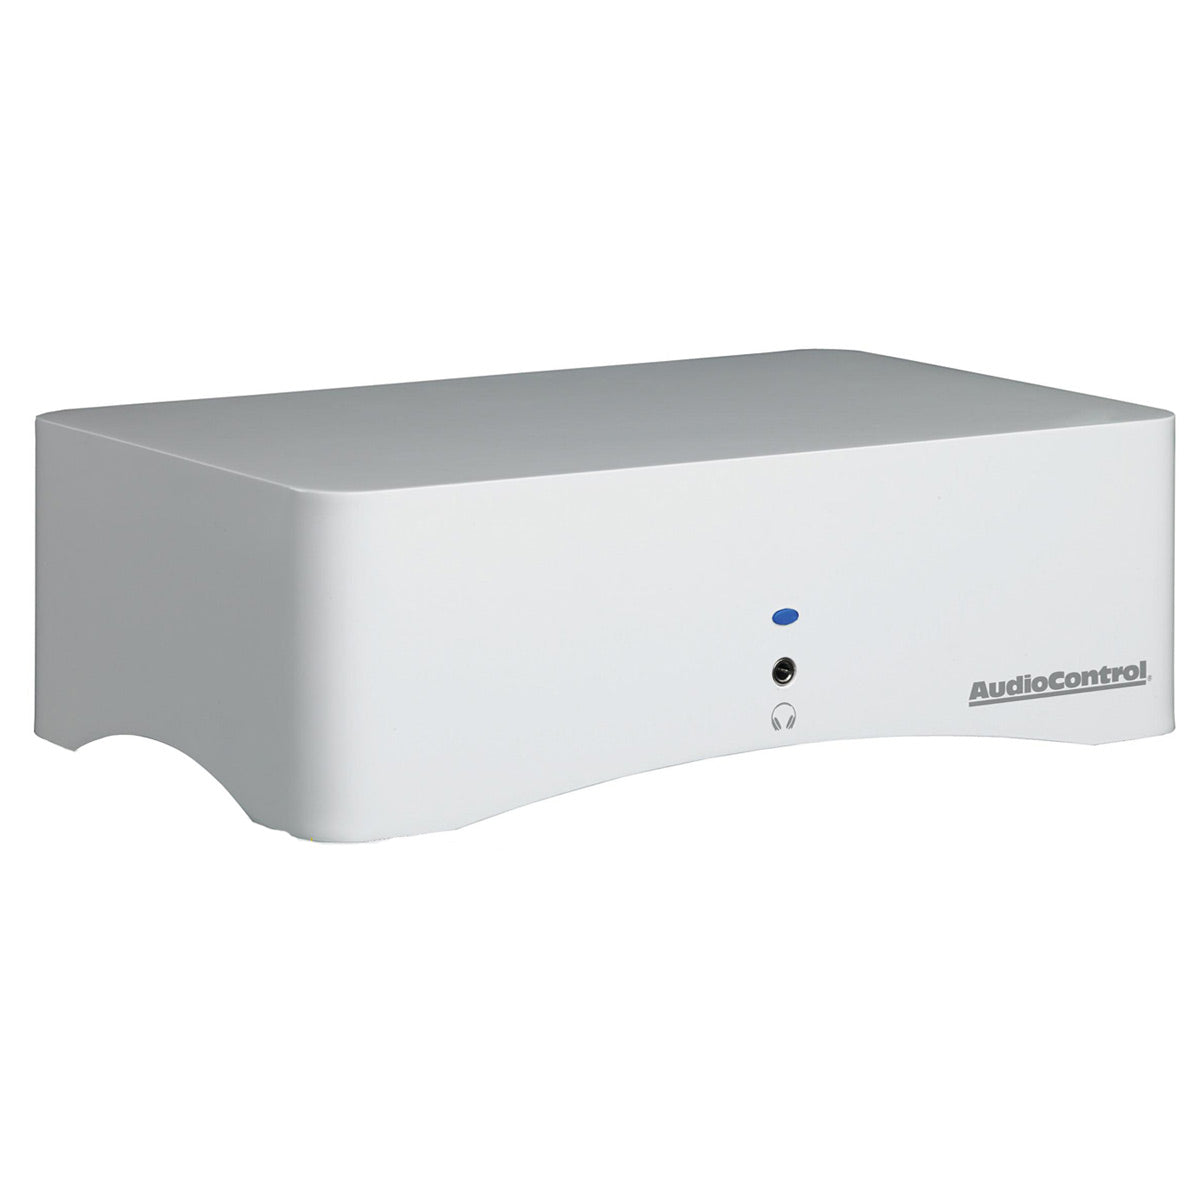 AudioControl Rialto 400 100W 2 Channel High Power Amplifier with Alexa Control (White)